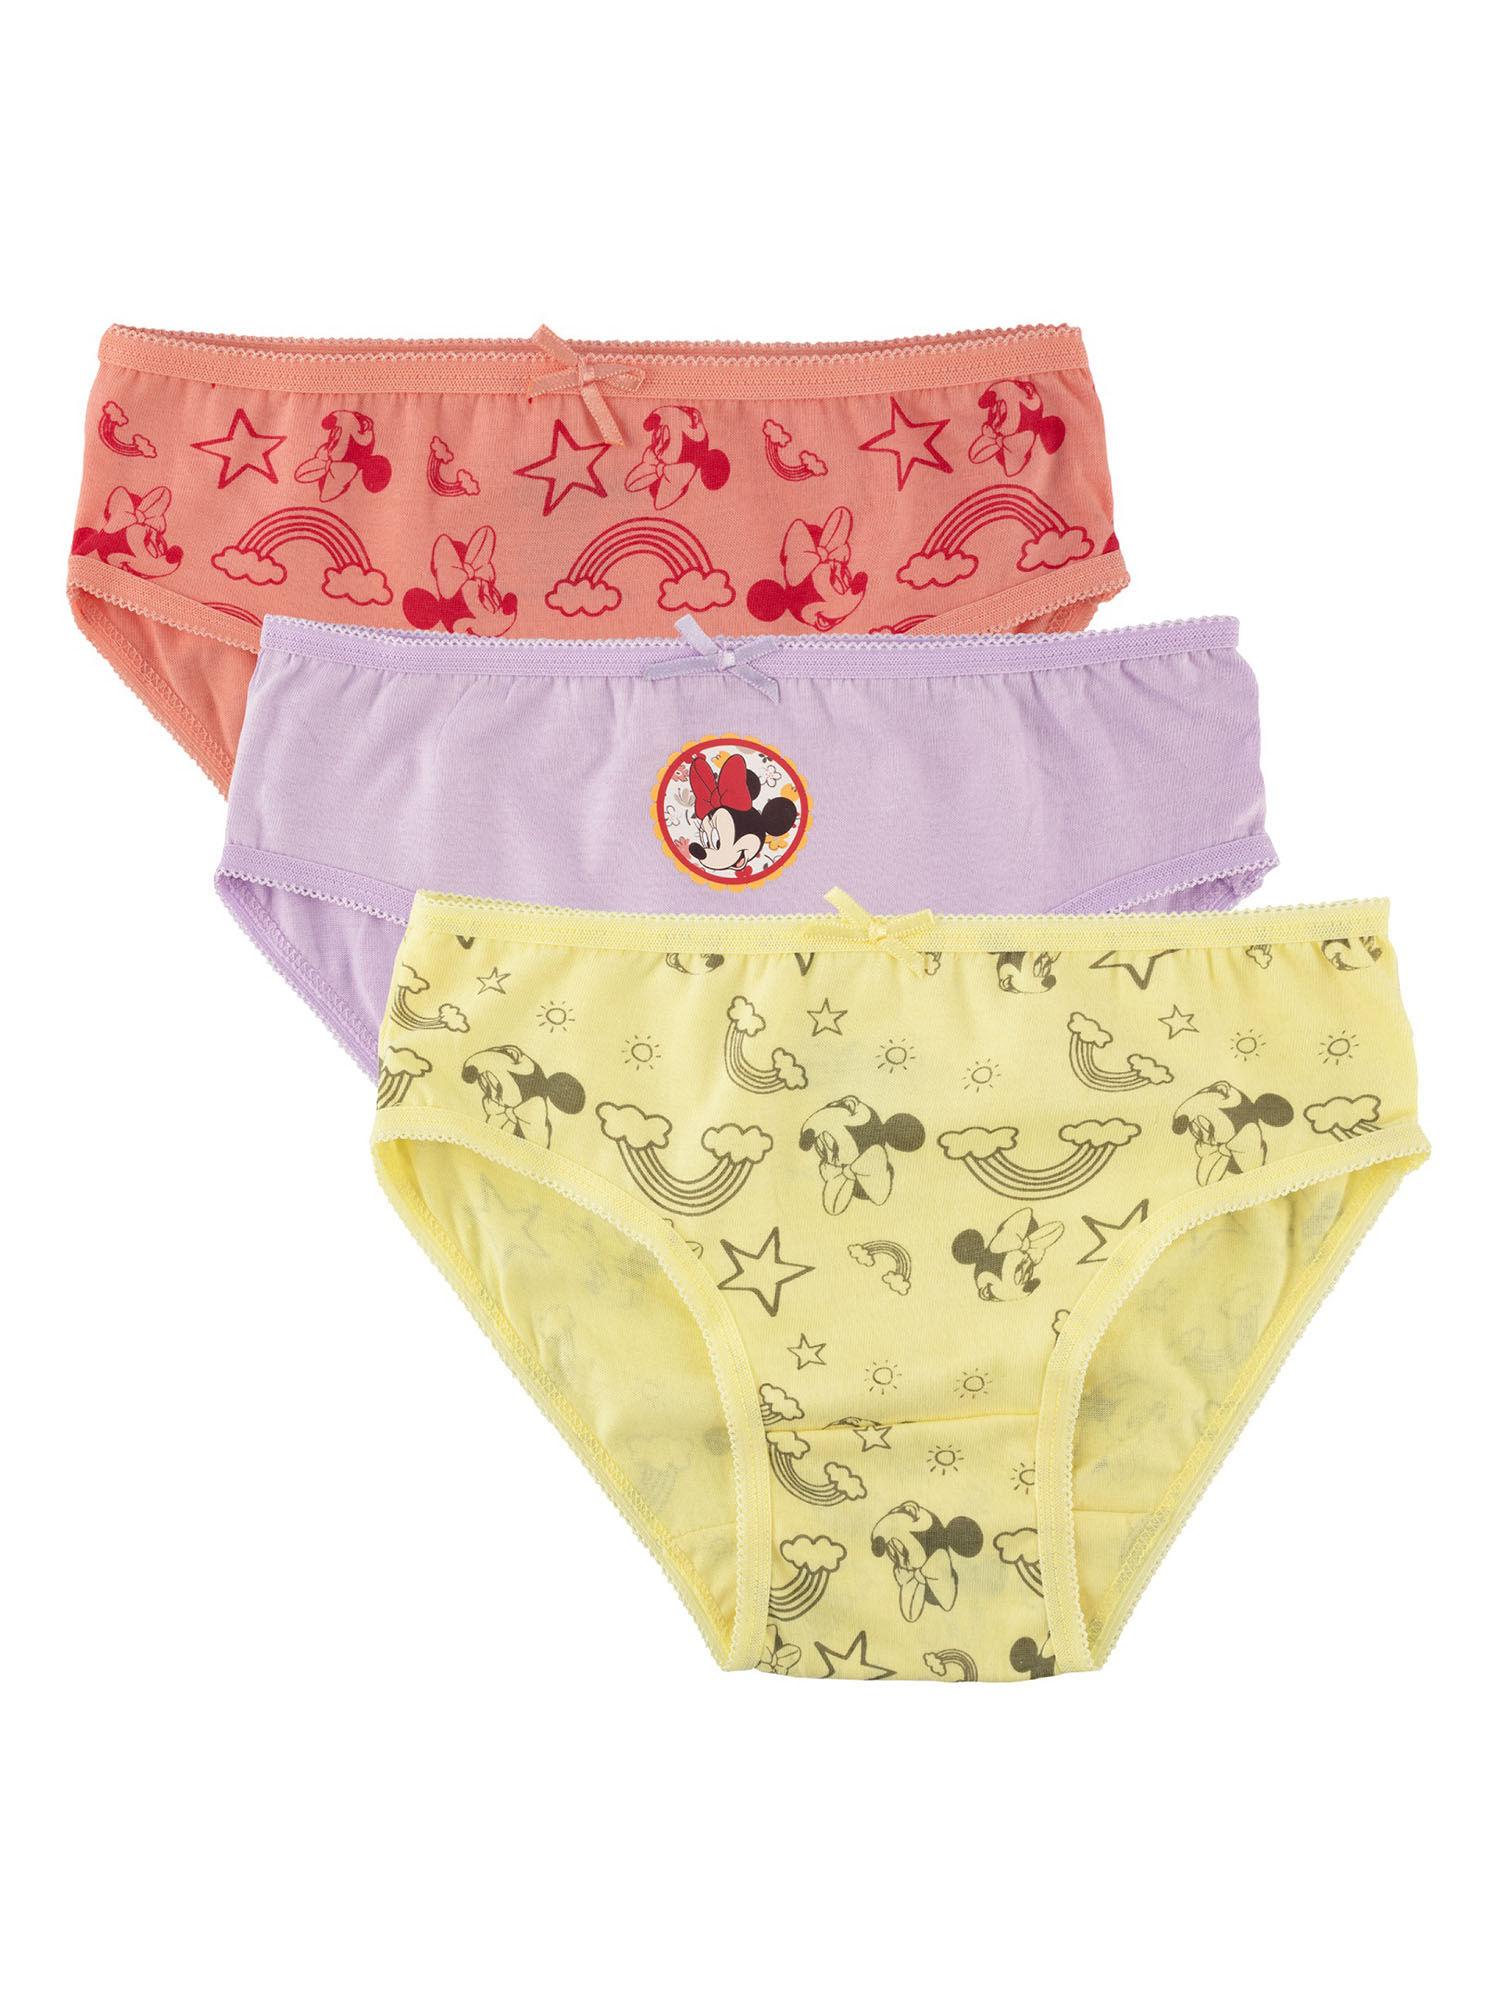 girls minnie mouse printed brief underwear innerwear multicolor (pack of 3)